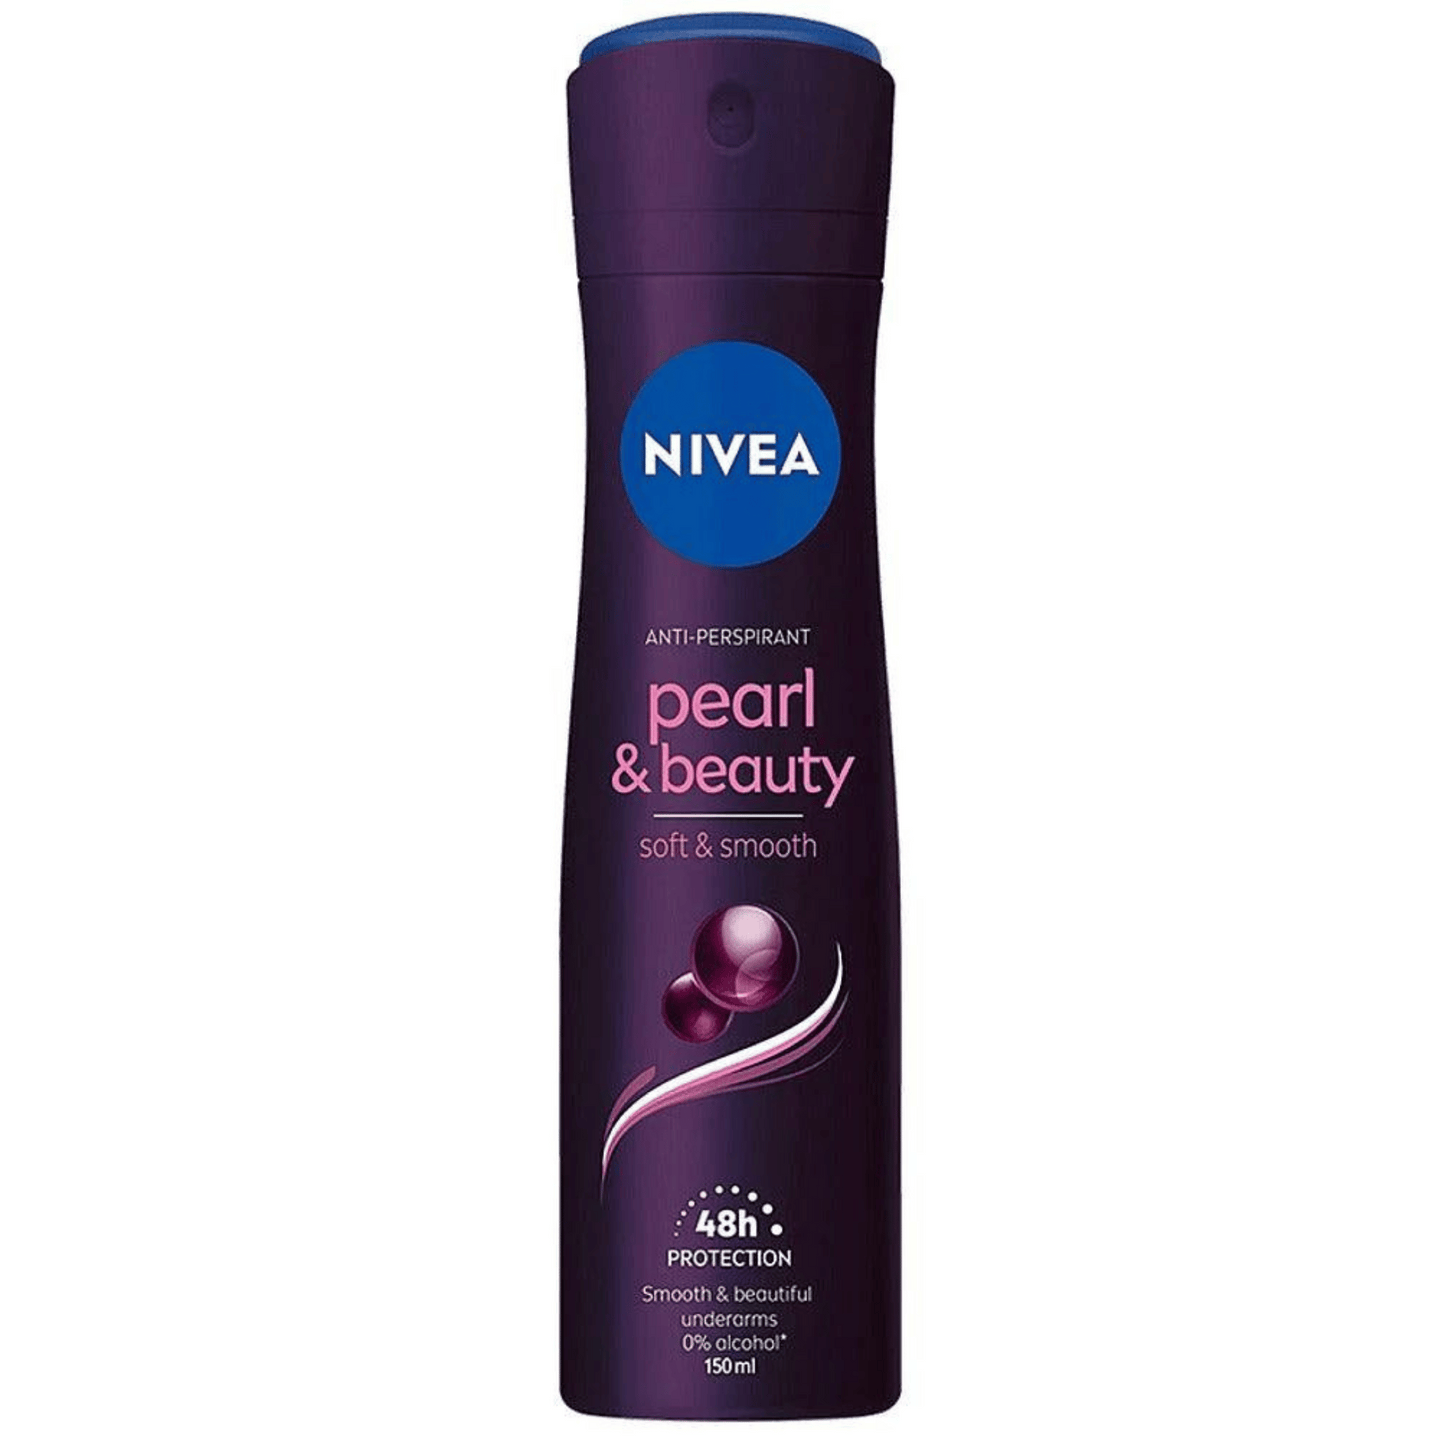 Primary Image of Women's Spray Black Pearl & Beauty Anti-Perspirant Deodorant